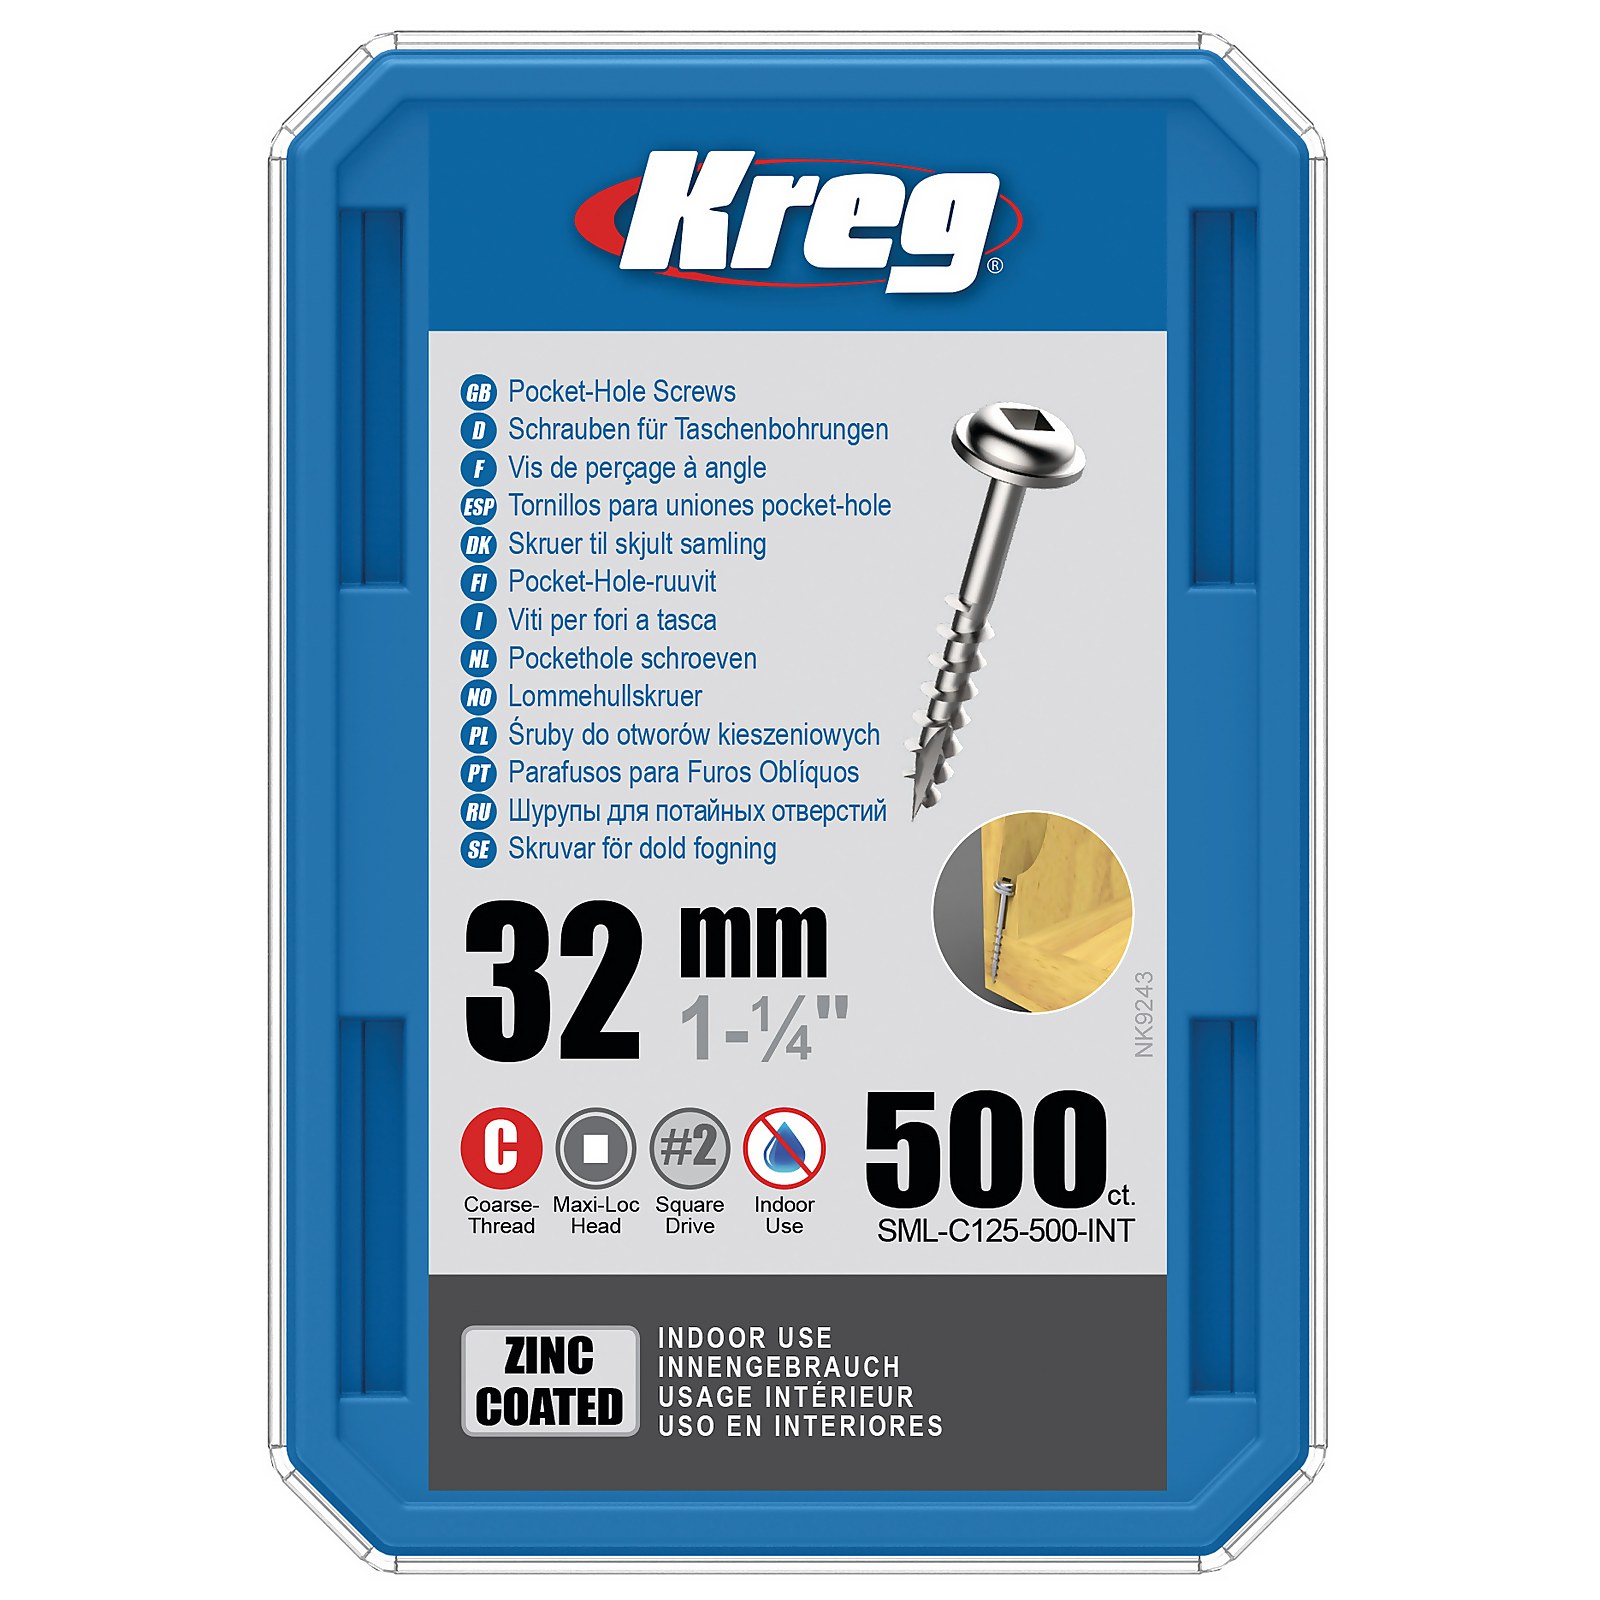 Photo of Kreg Sml-c125-500-eur Zinc Pocket-hole Screws - 32mm / 1.25 - #8 Coarse-thread- Maxi-loc - 500 Pack